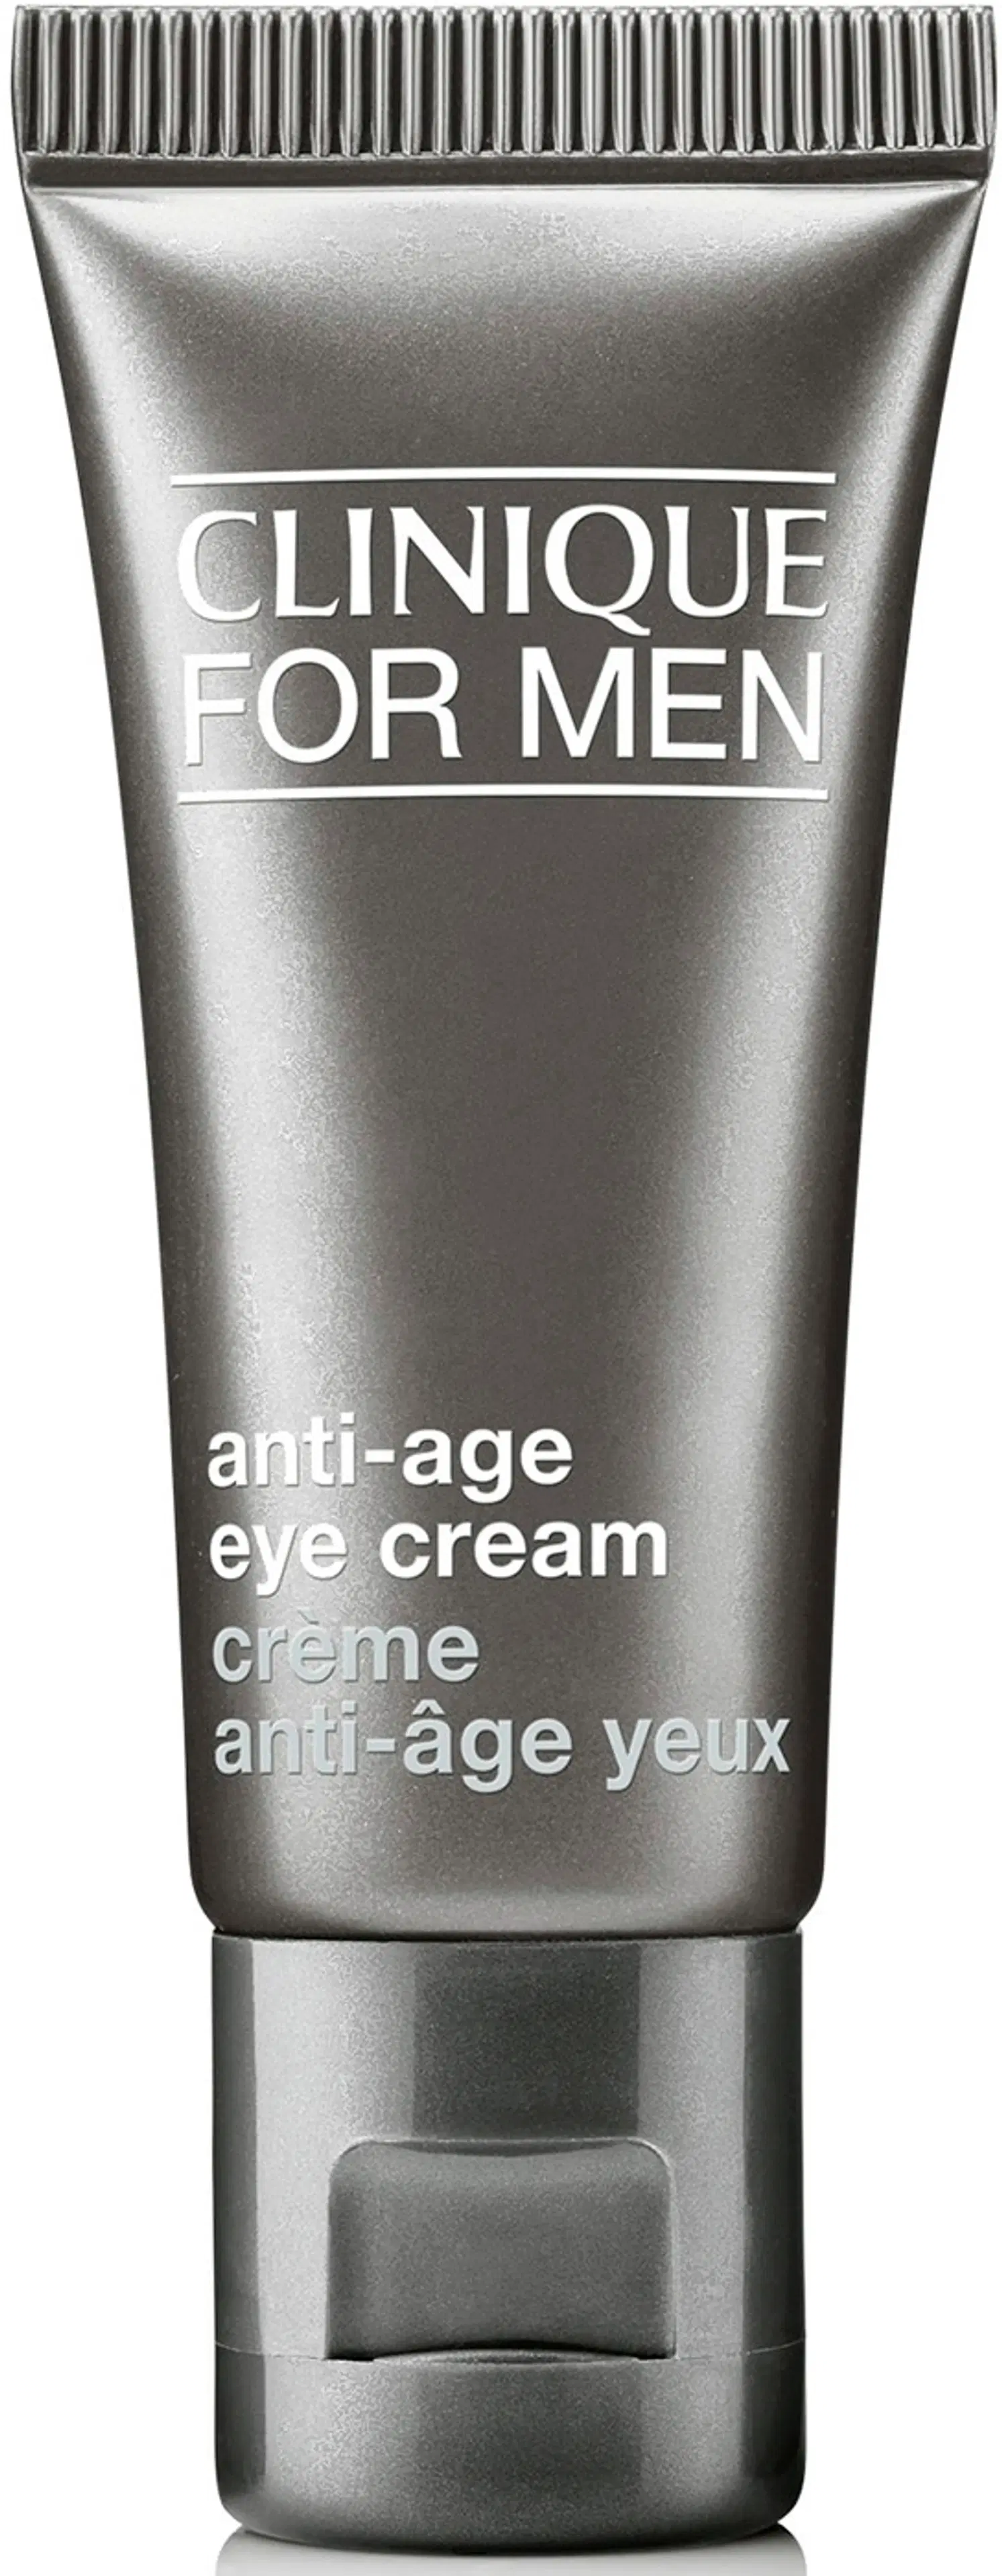 Clinique for Men Anti-Age Eye Cream silmänympärysvoide 15 ml